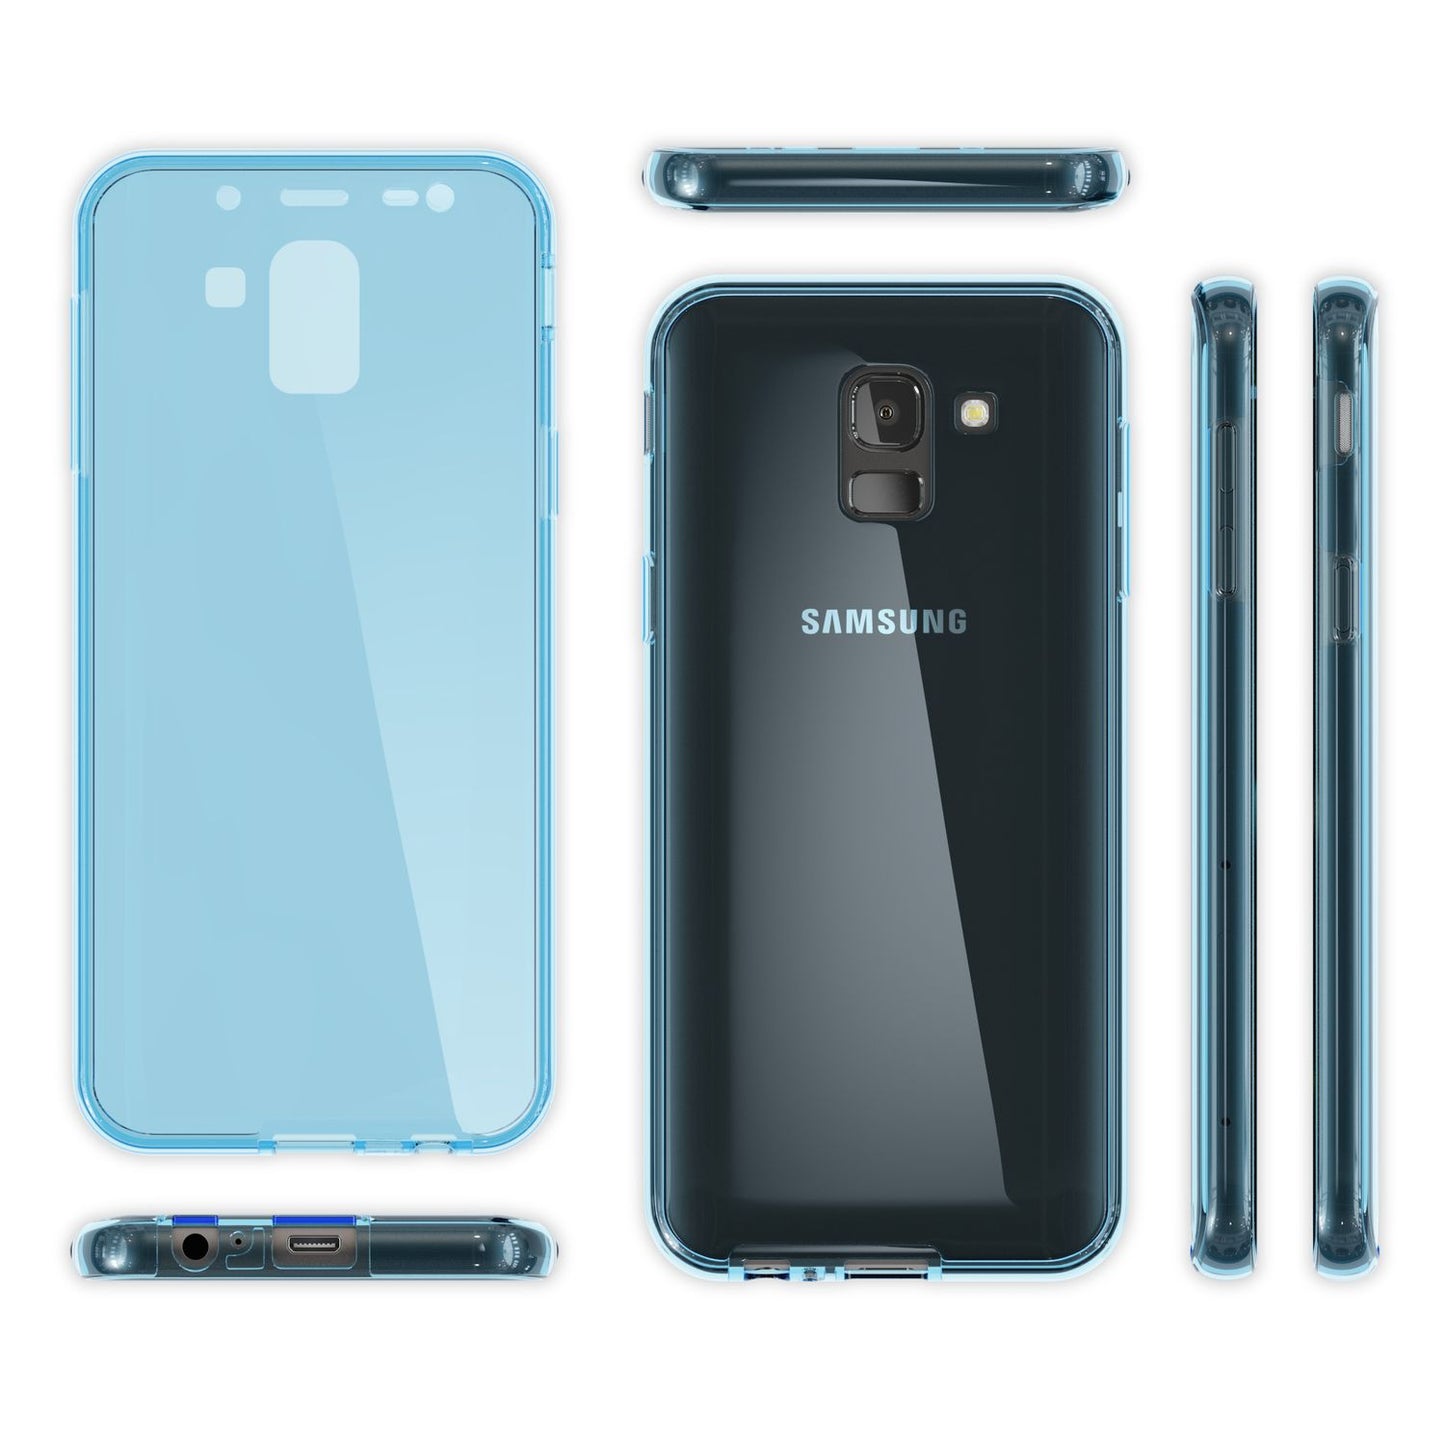 NALIA 360 Grad Handyhülle Samsung Galaxy J6, Hülle Full Cover vorne hinten Etui